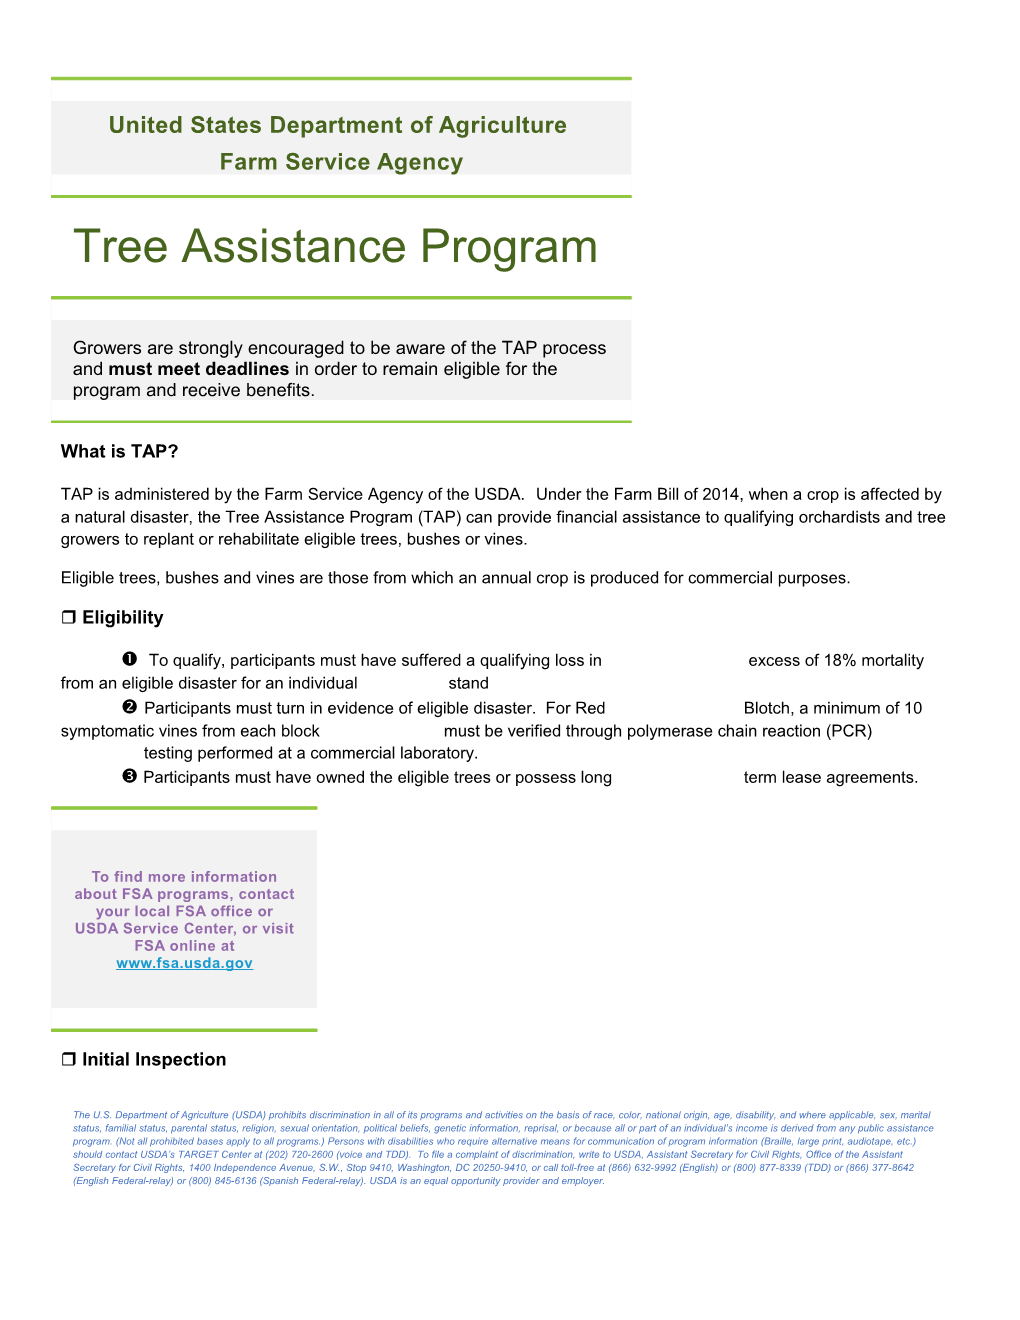 Tree Assistance Program